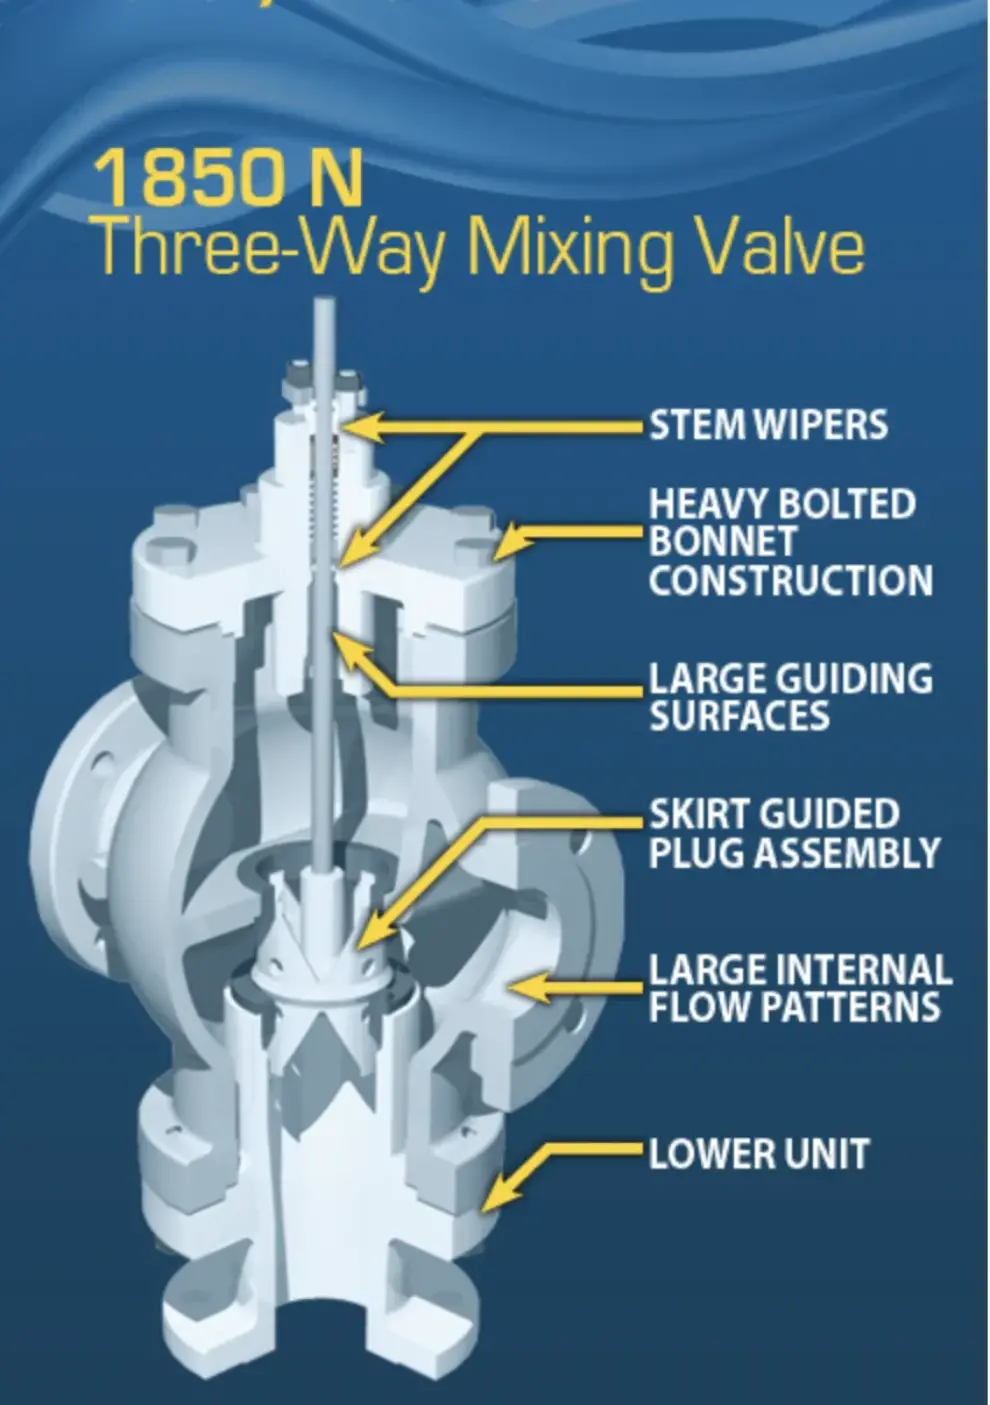 Warren Controls Offers 1852N Seawater Deballasting Valve